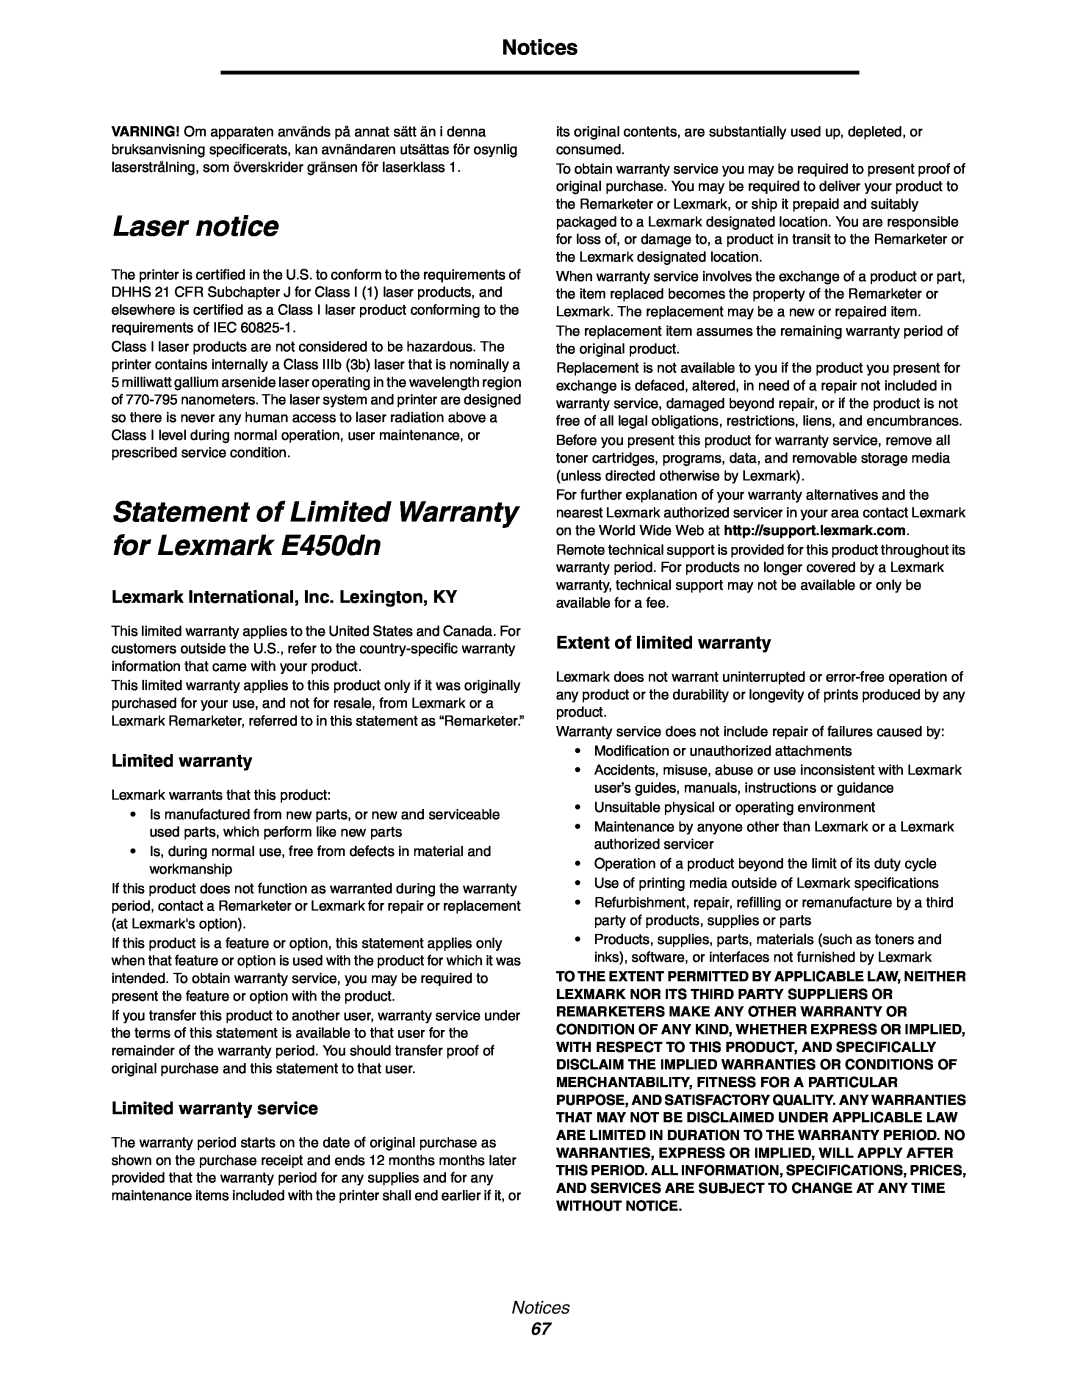 Lexmark manual Laser notice, Statement of Limited Warranty for Lexmark E450dn, Lexmark International, Inc. Lexington, KY 